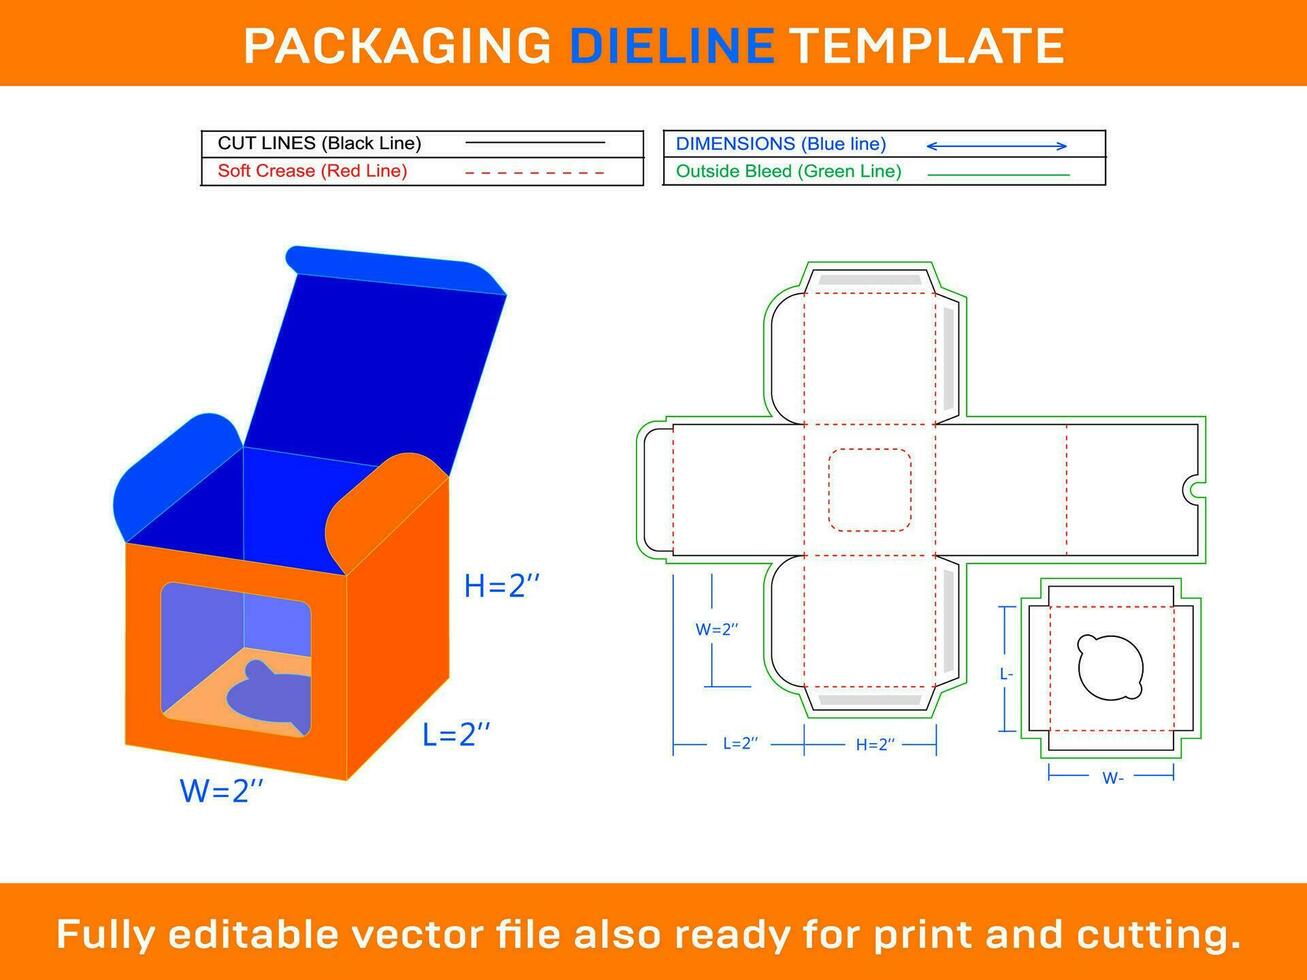 muffin låda, fyrkant visa låda, Död linje mall svg, ai, eps, pdf,jpg, png fil vektor